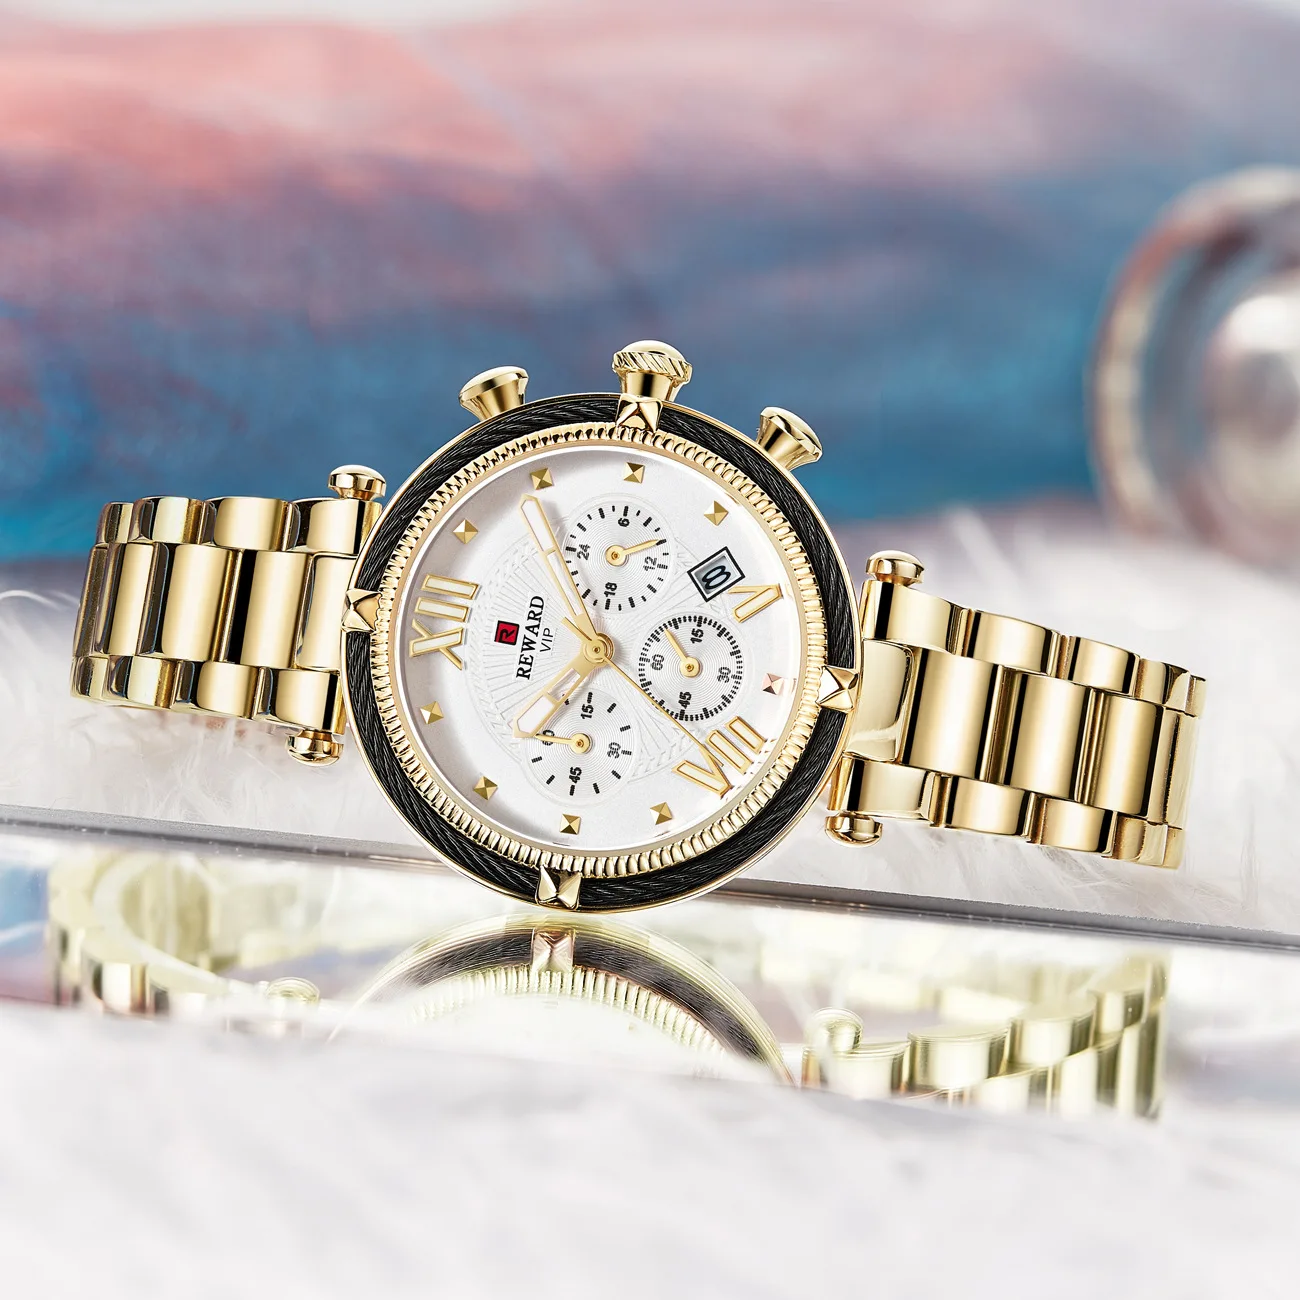 Награда Топ бренд женские модные кварцевые часы водонепроницаемые повседневные женские нарядные часы для женщин часы Relogio Feminino